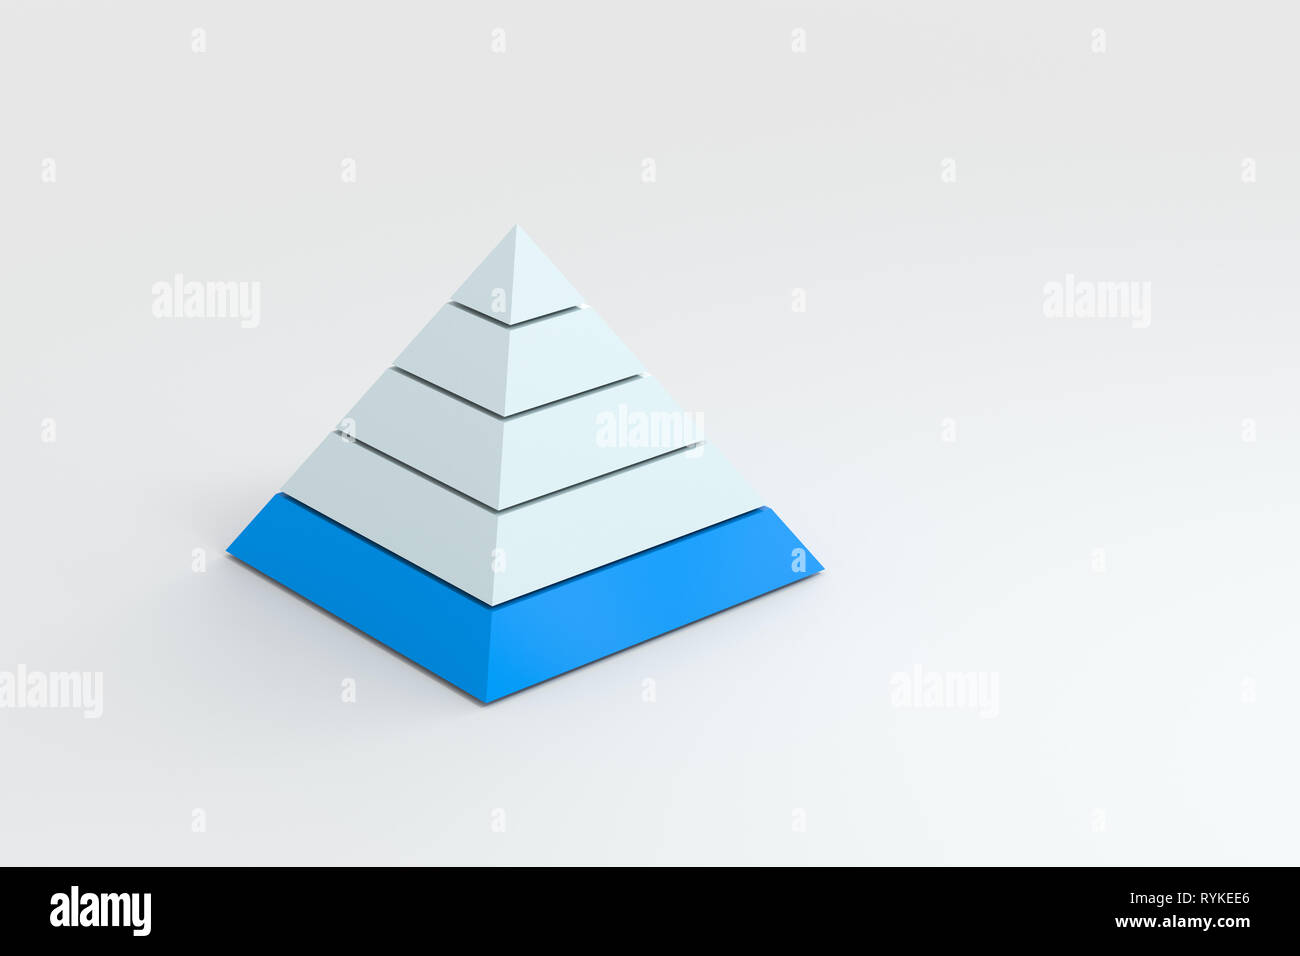 3d model pyramid, 3d rendering Stock Photo